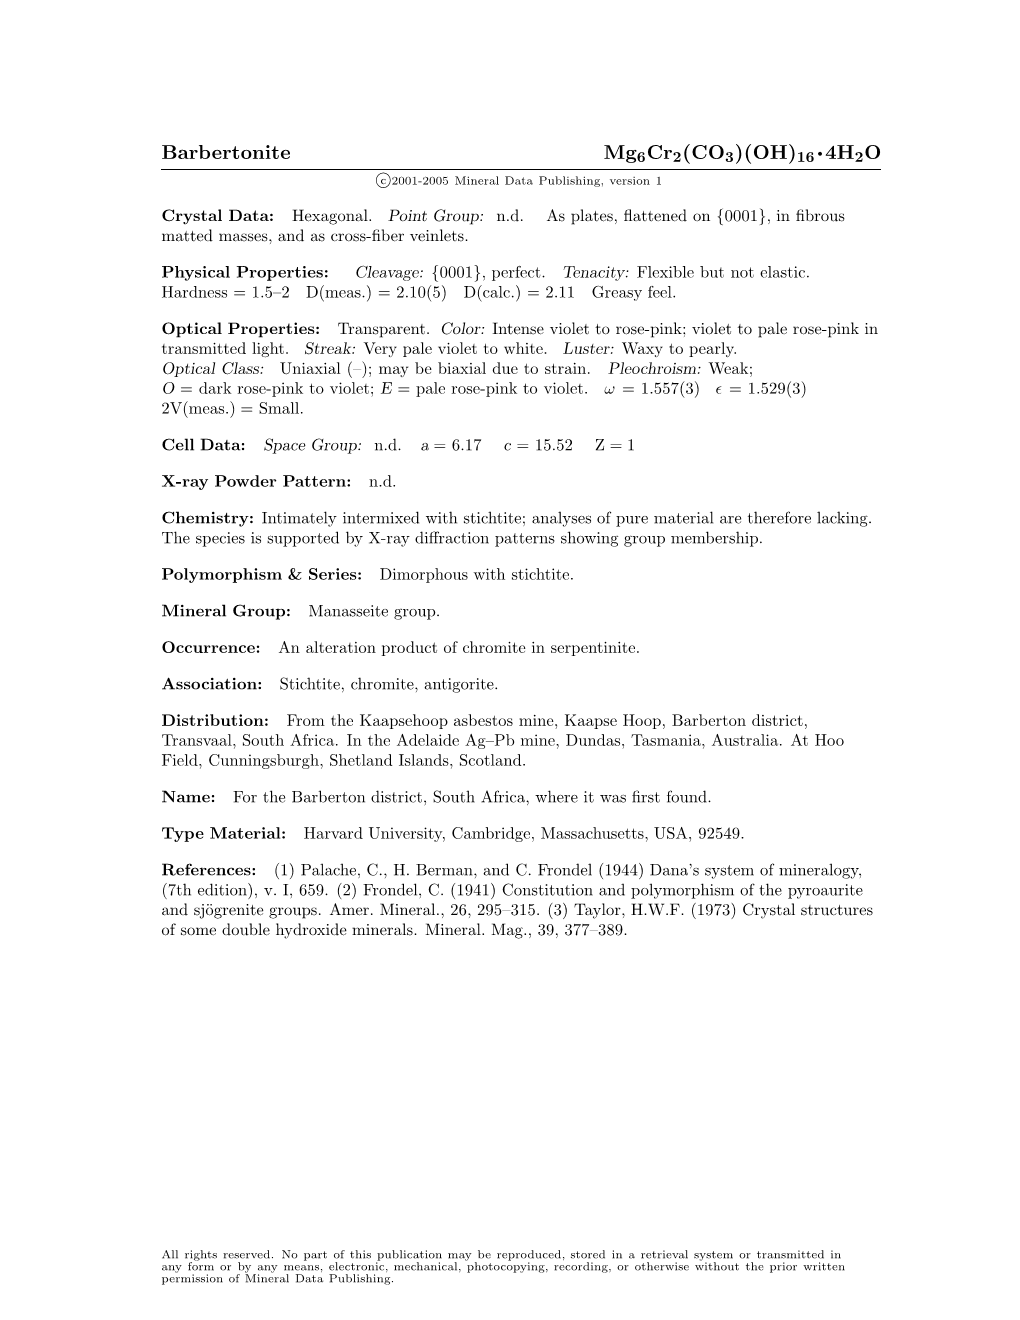 Barbertonite Mg6cr2(CO3)(OH)16 • 4H2O C 2001-2005 Mineral Data Publishing, Version 1